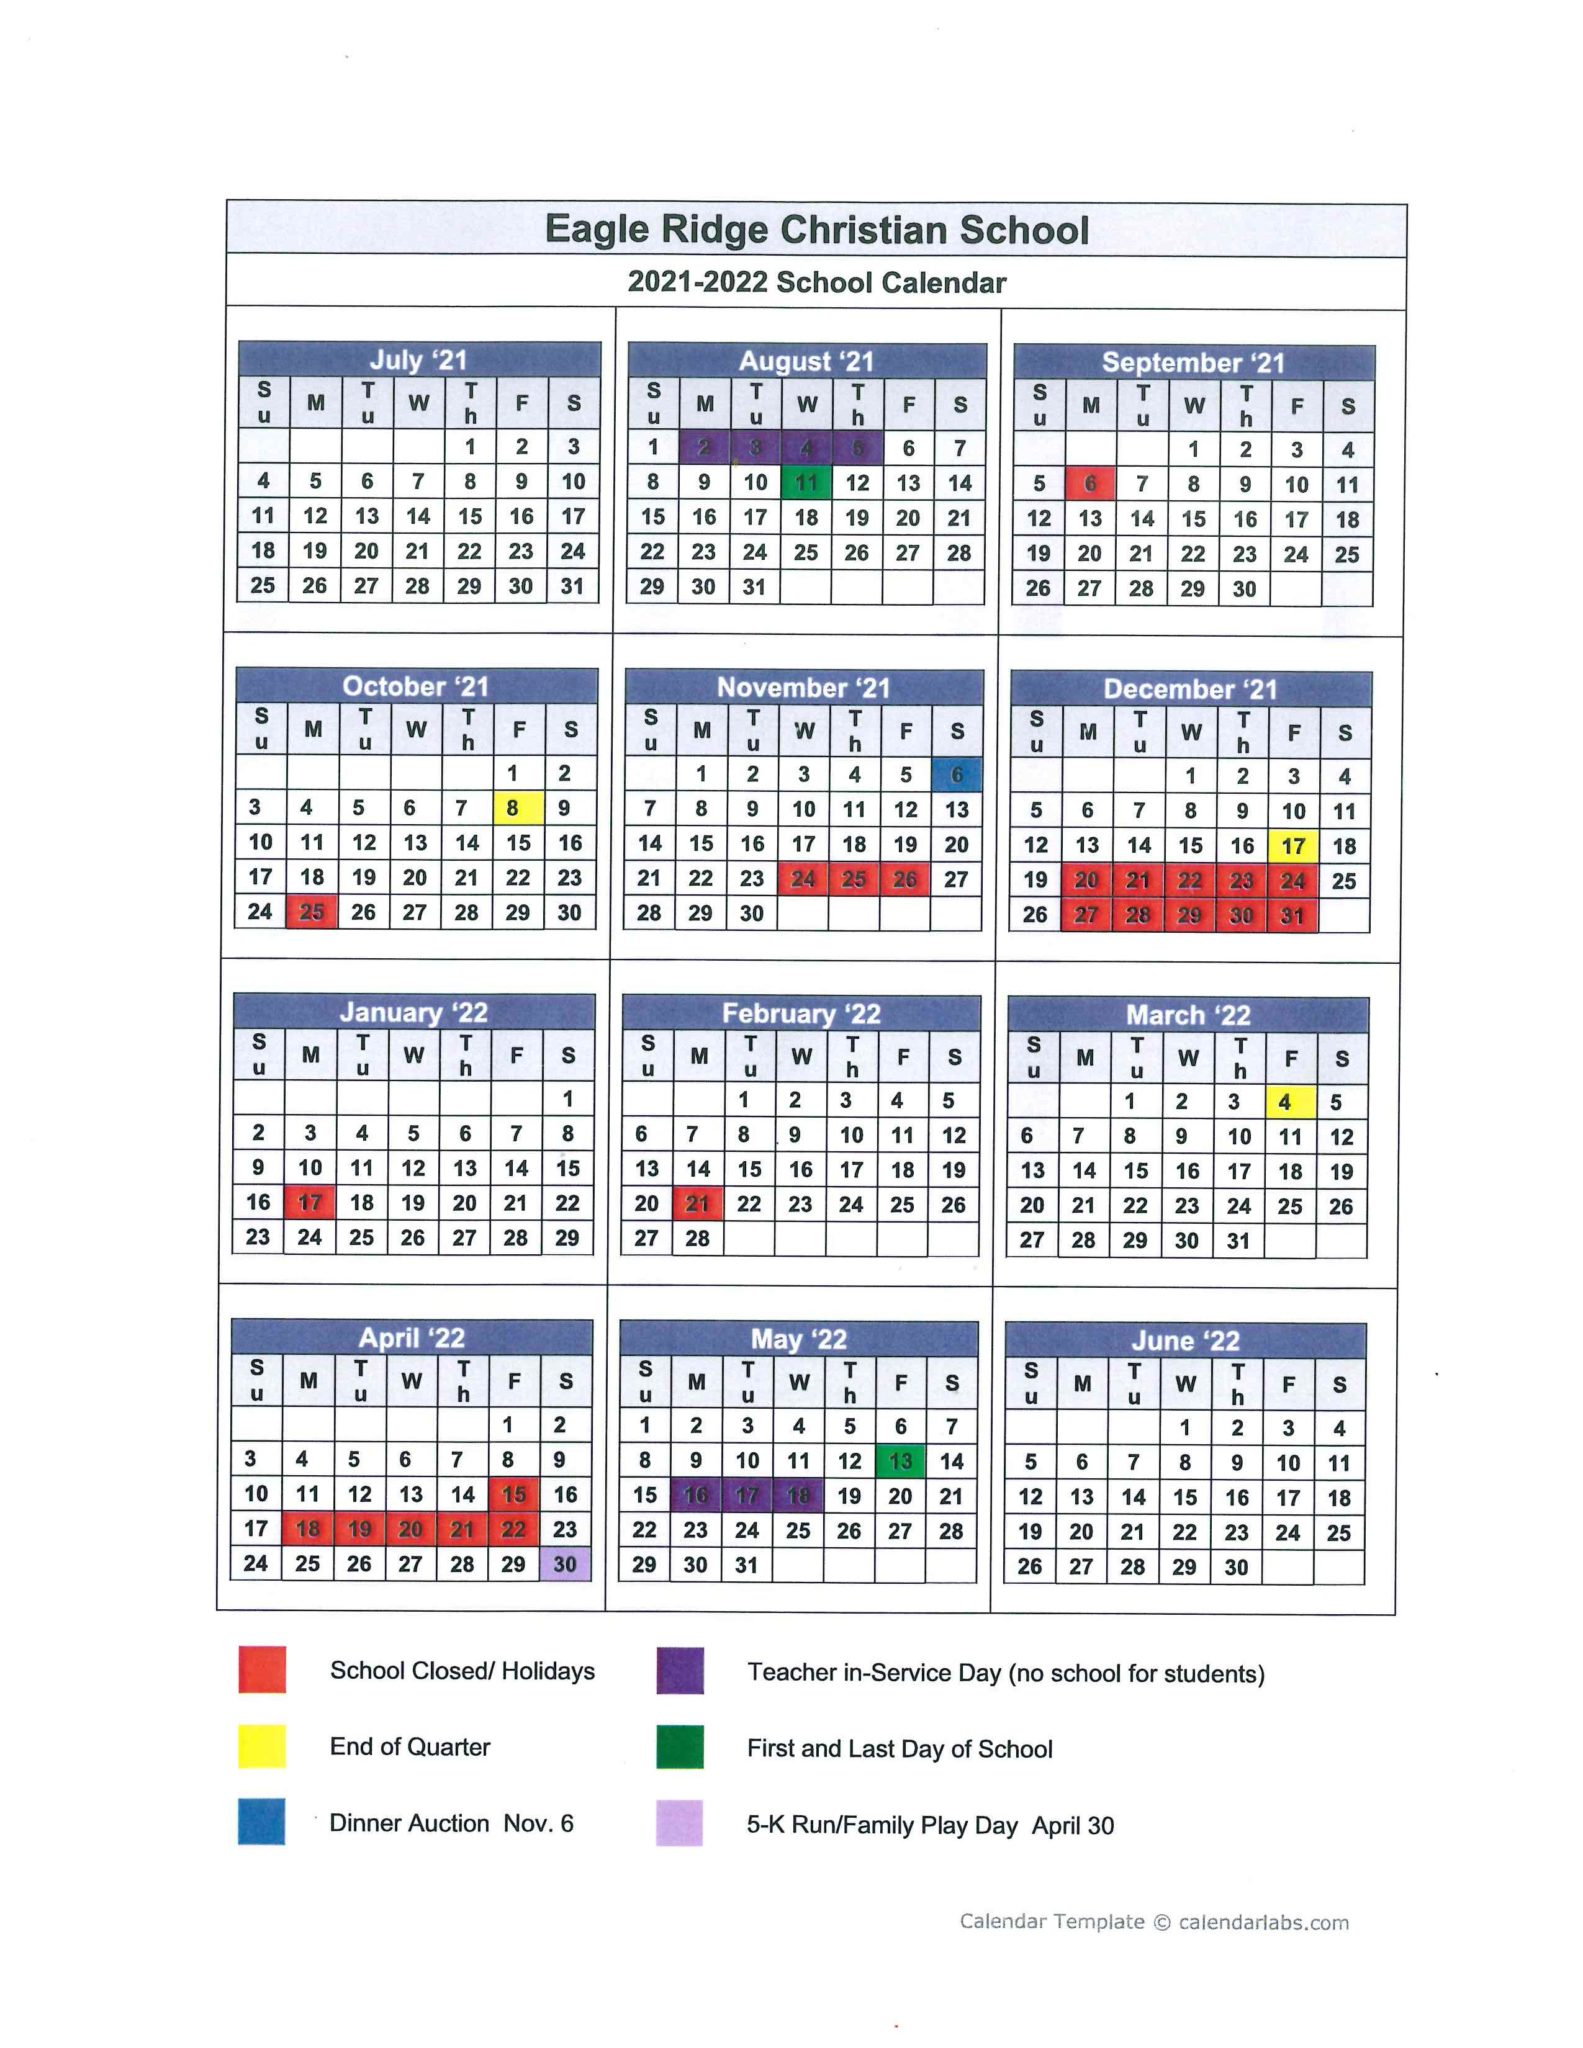 school-calendar-eagle-ridge-christian-school